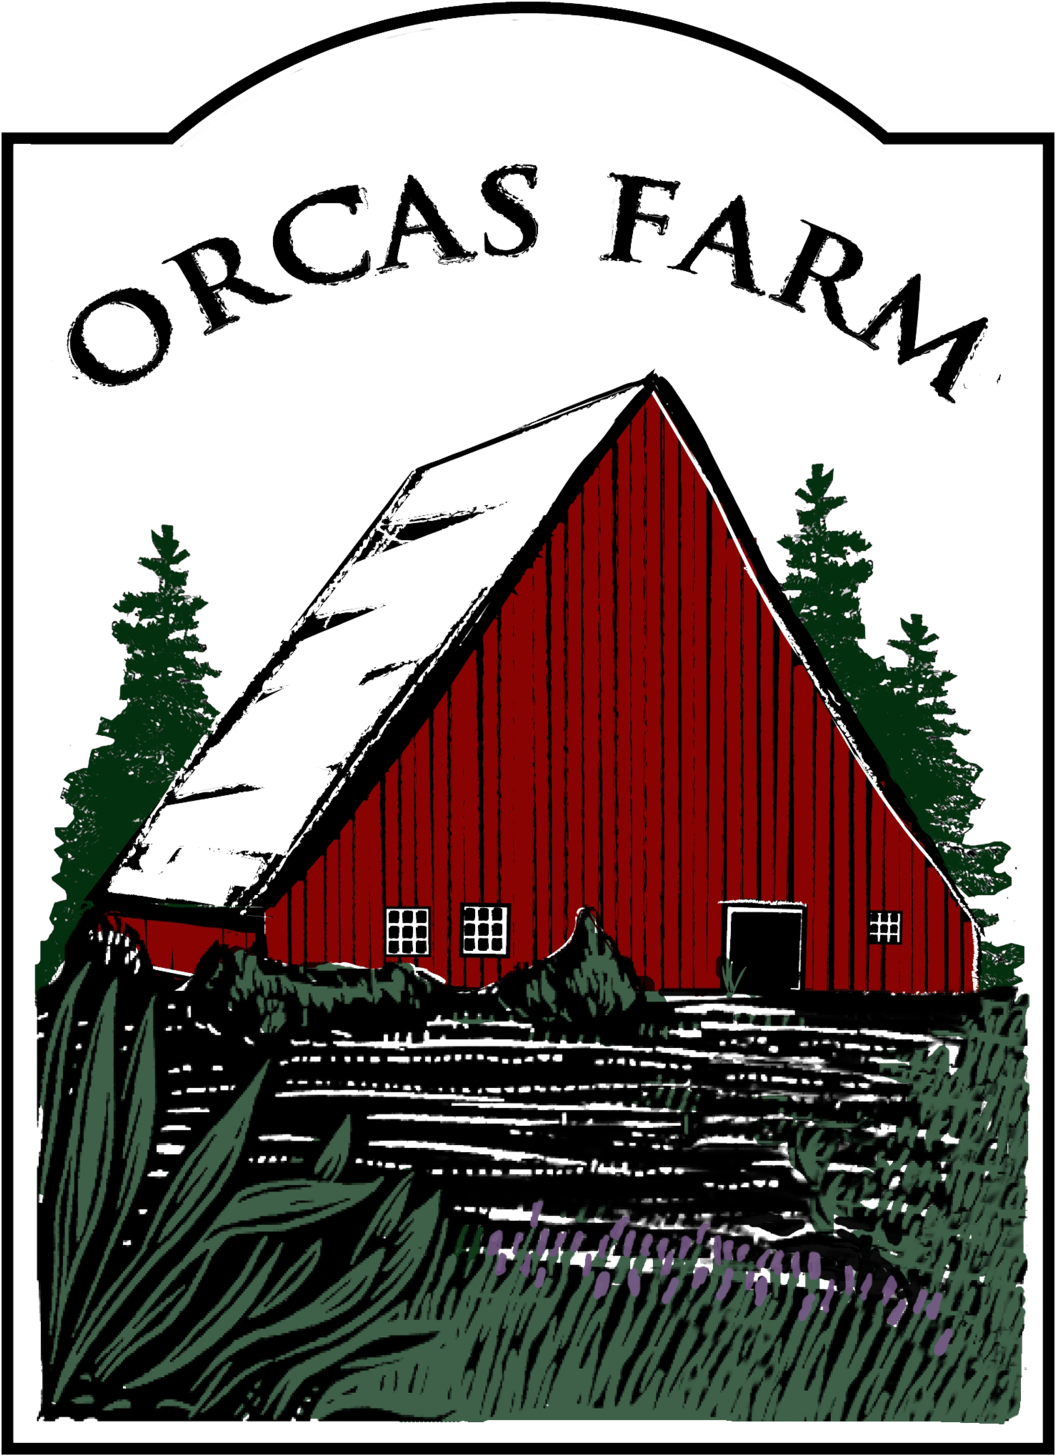 About Us Orcas - Orcas Farm (1500x1454)